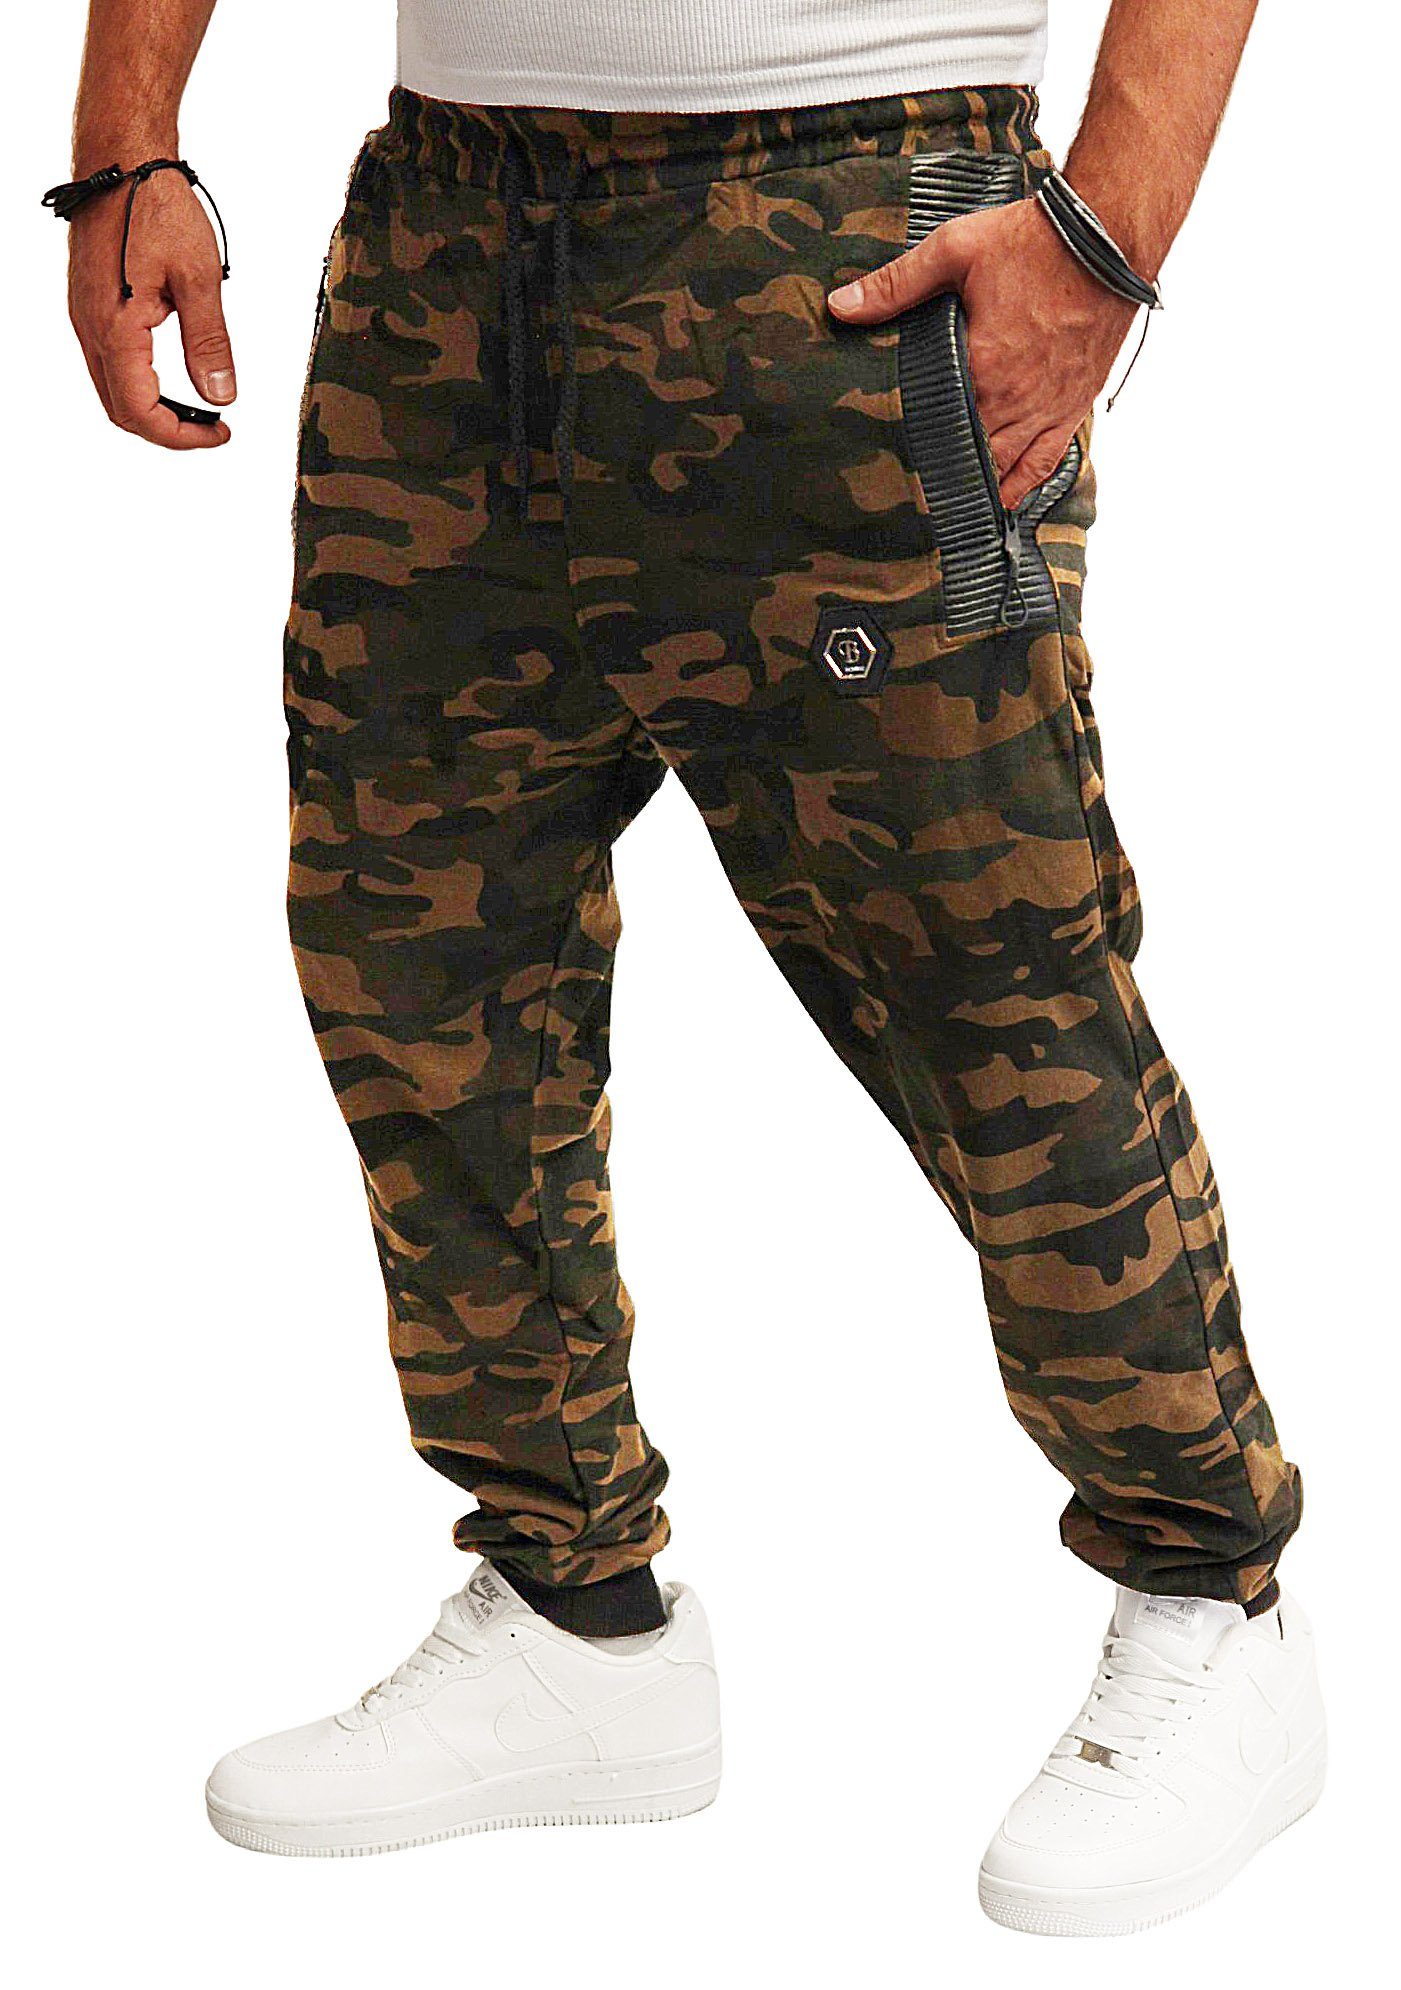 Sport Hose RMK Camouflage Trainingshose H.51 Fitnesshose Army Jogginghose Tarn Herren Camouflage